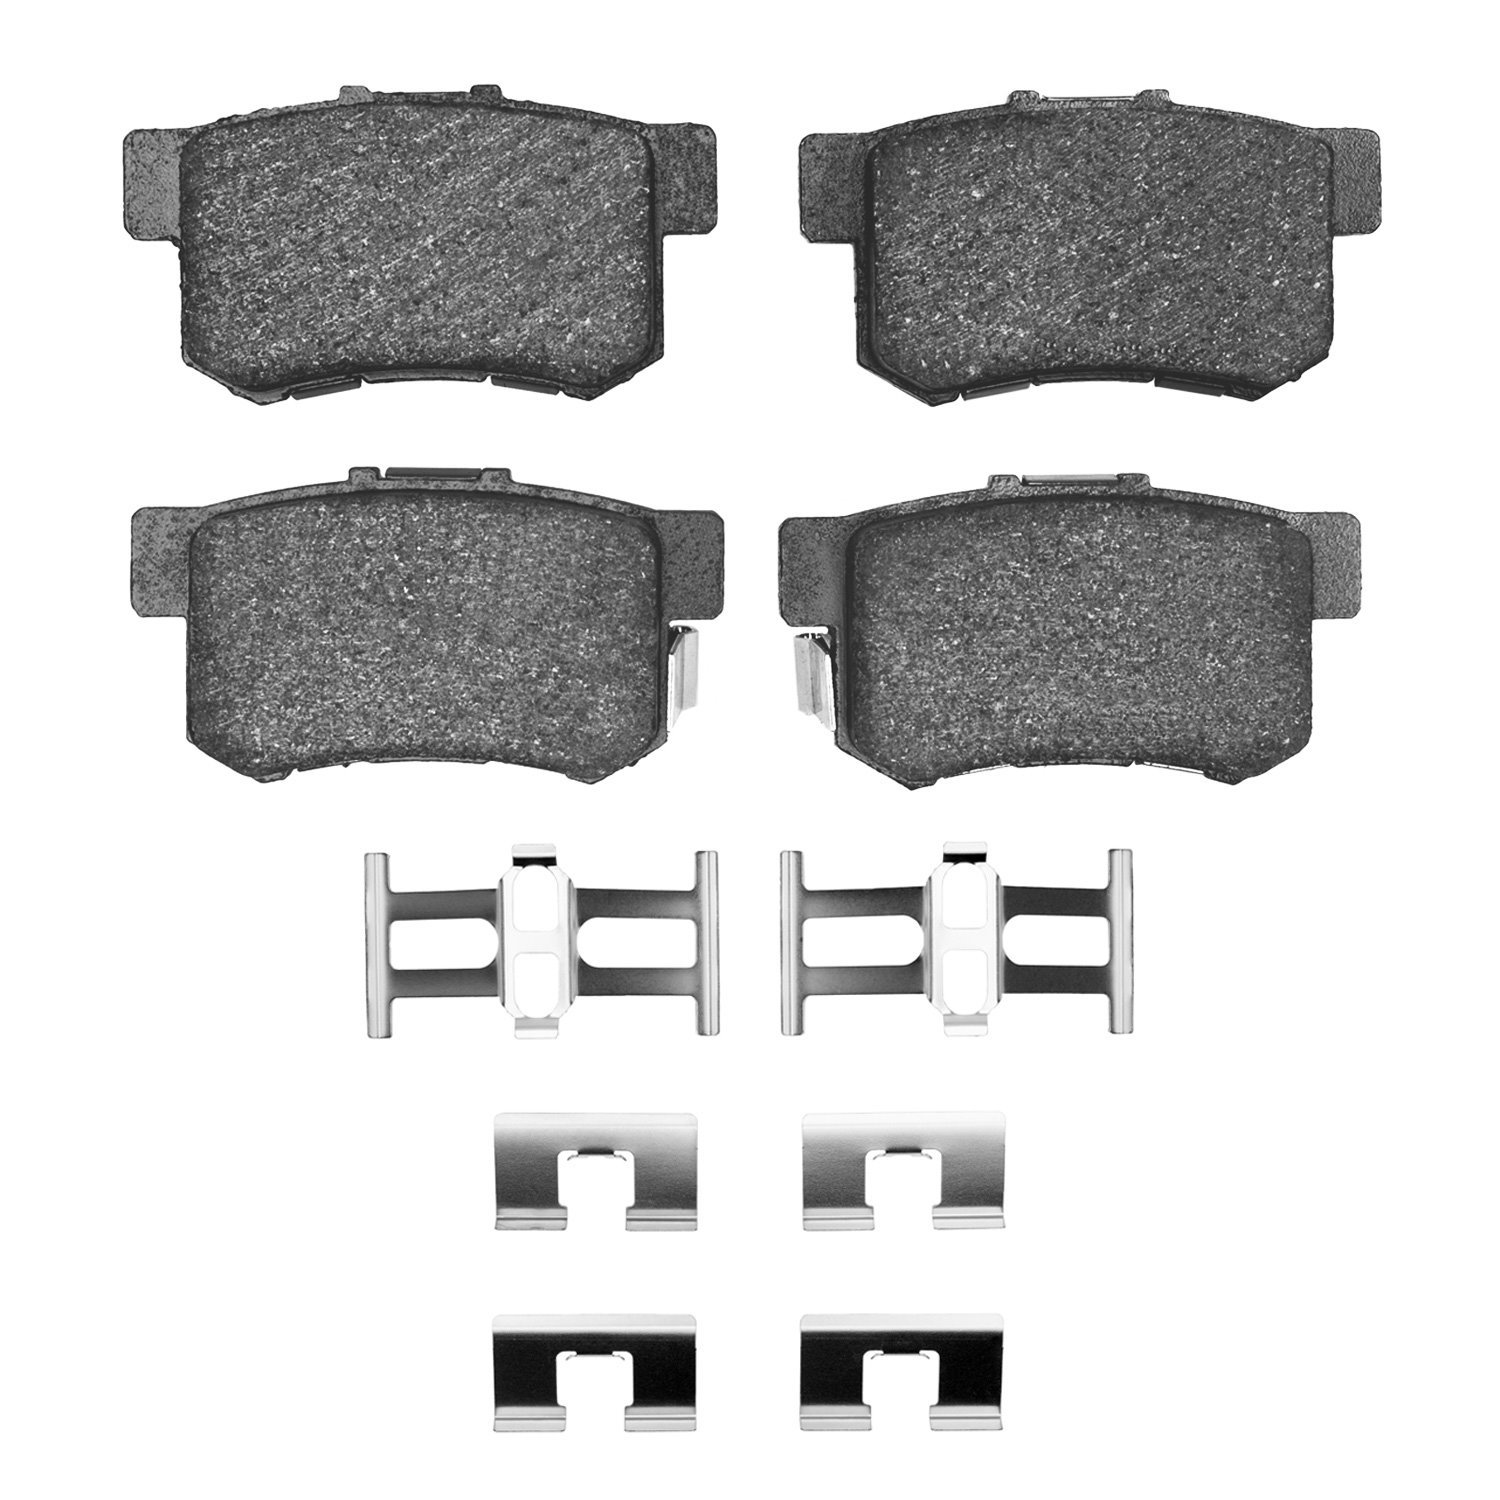 1551-0536-01 5000 Advanced Ceramic Brake Pads & Hardware Kit, 1991-2012 Multiple Makes/Models, Position: Rear